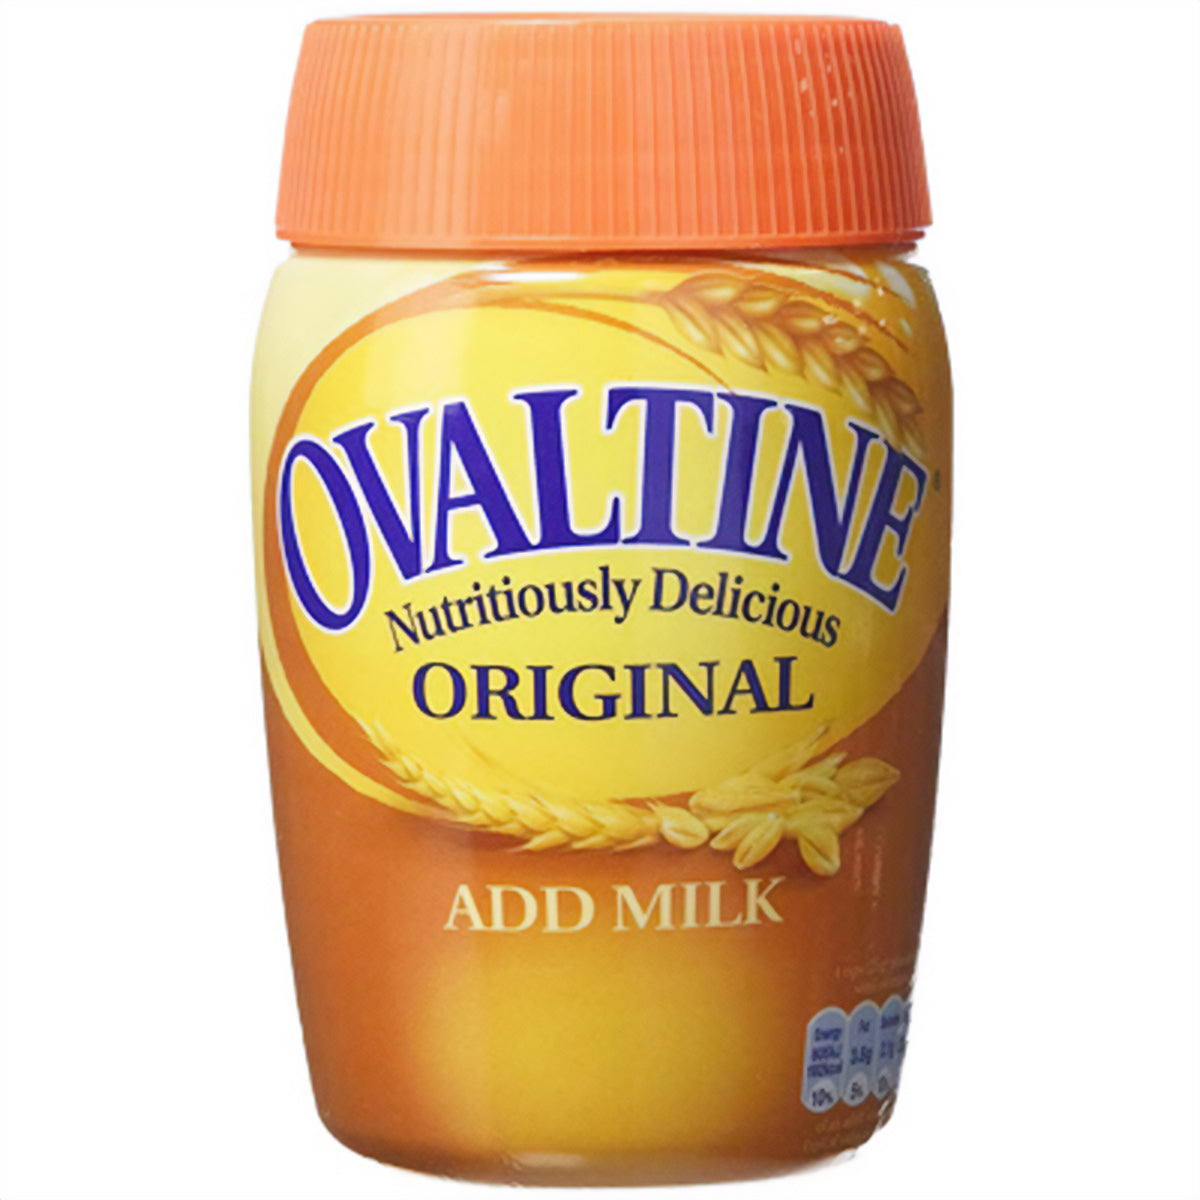 A jar of Ovaltine - Original - 800g add milk.